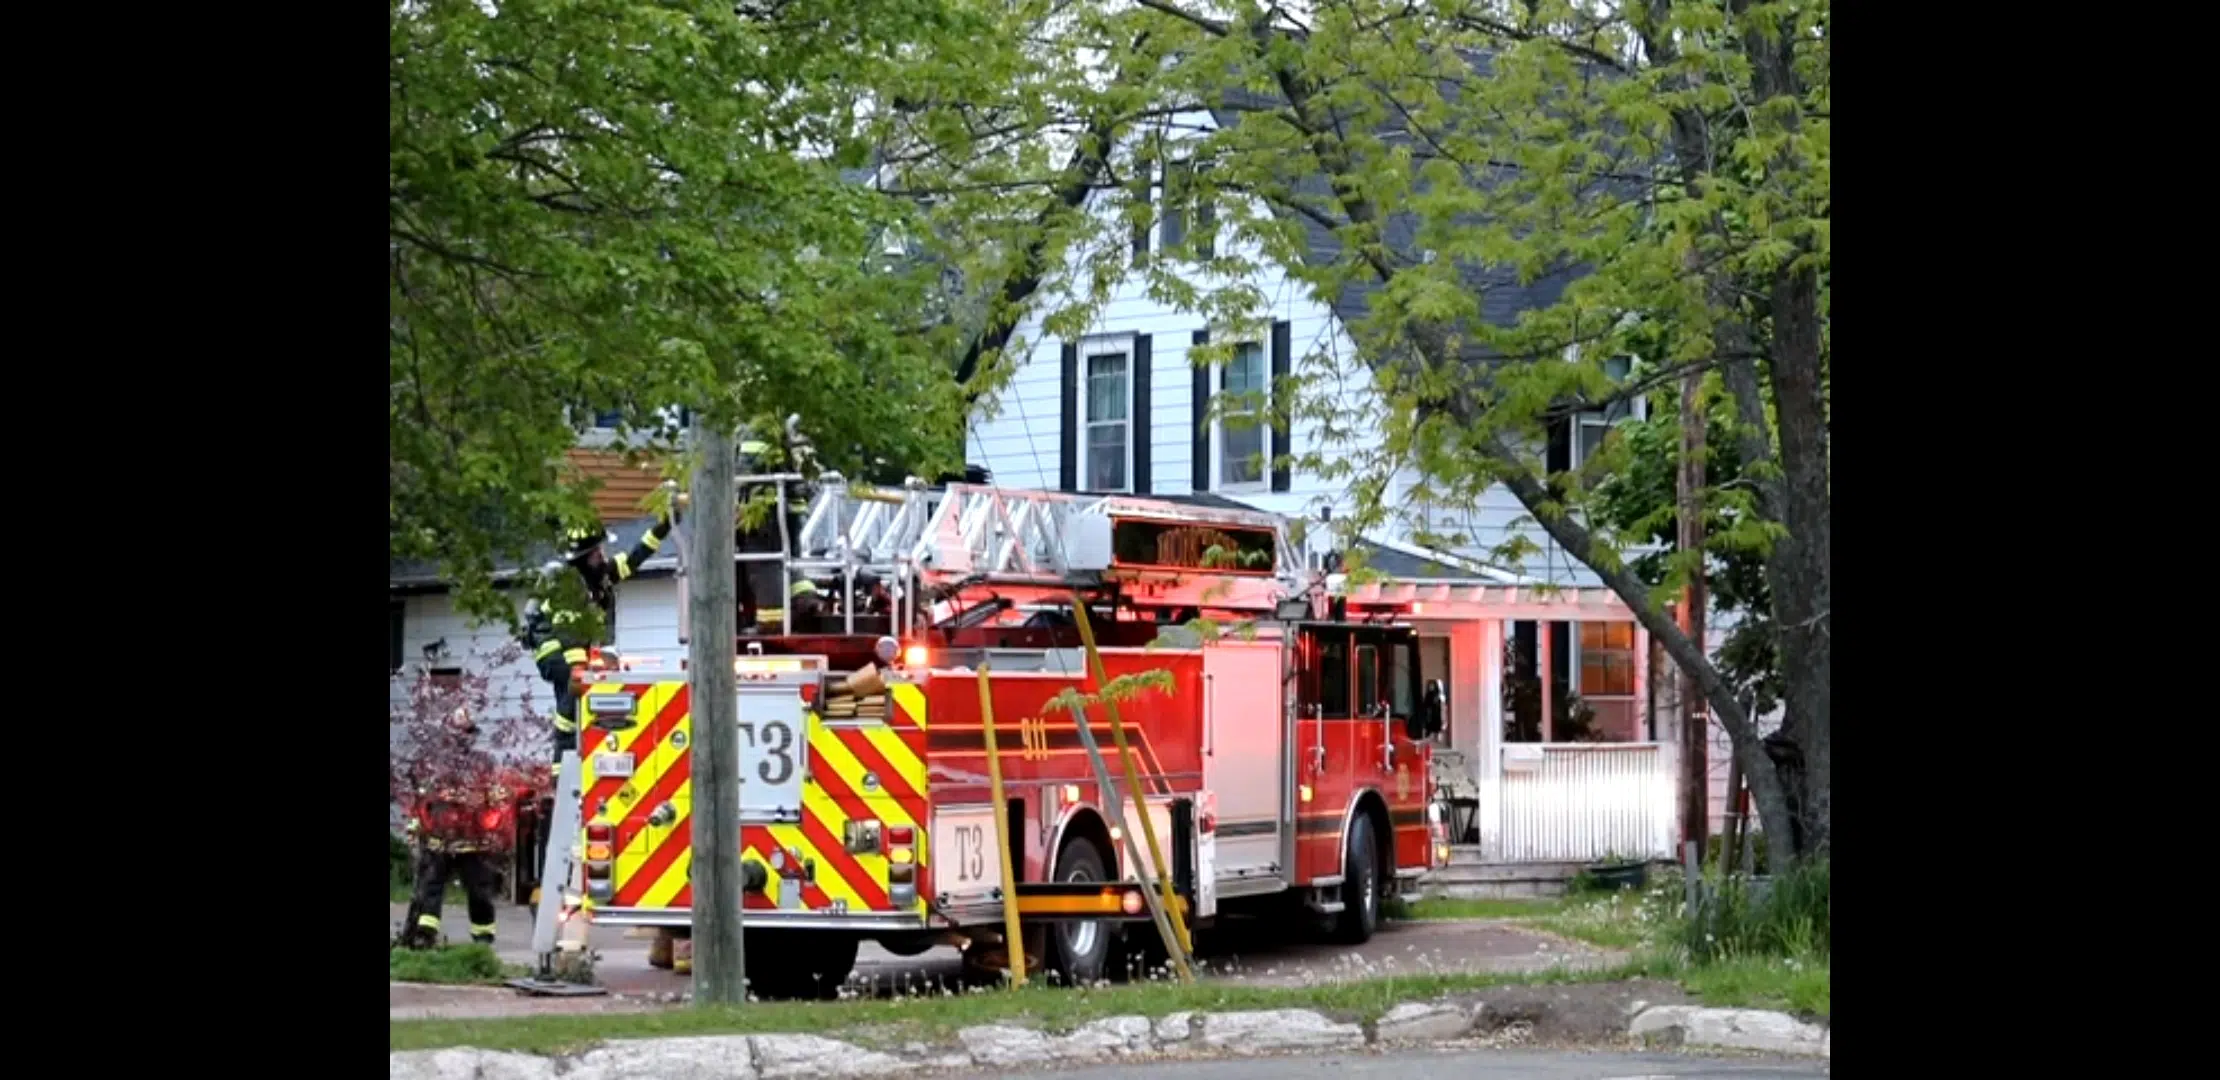 High Carbon Monoxide Levels Found After Family Evacuates